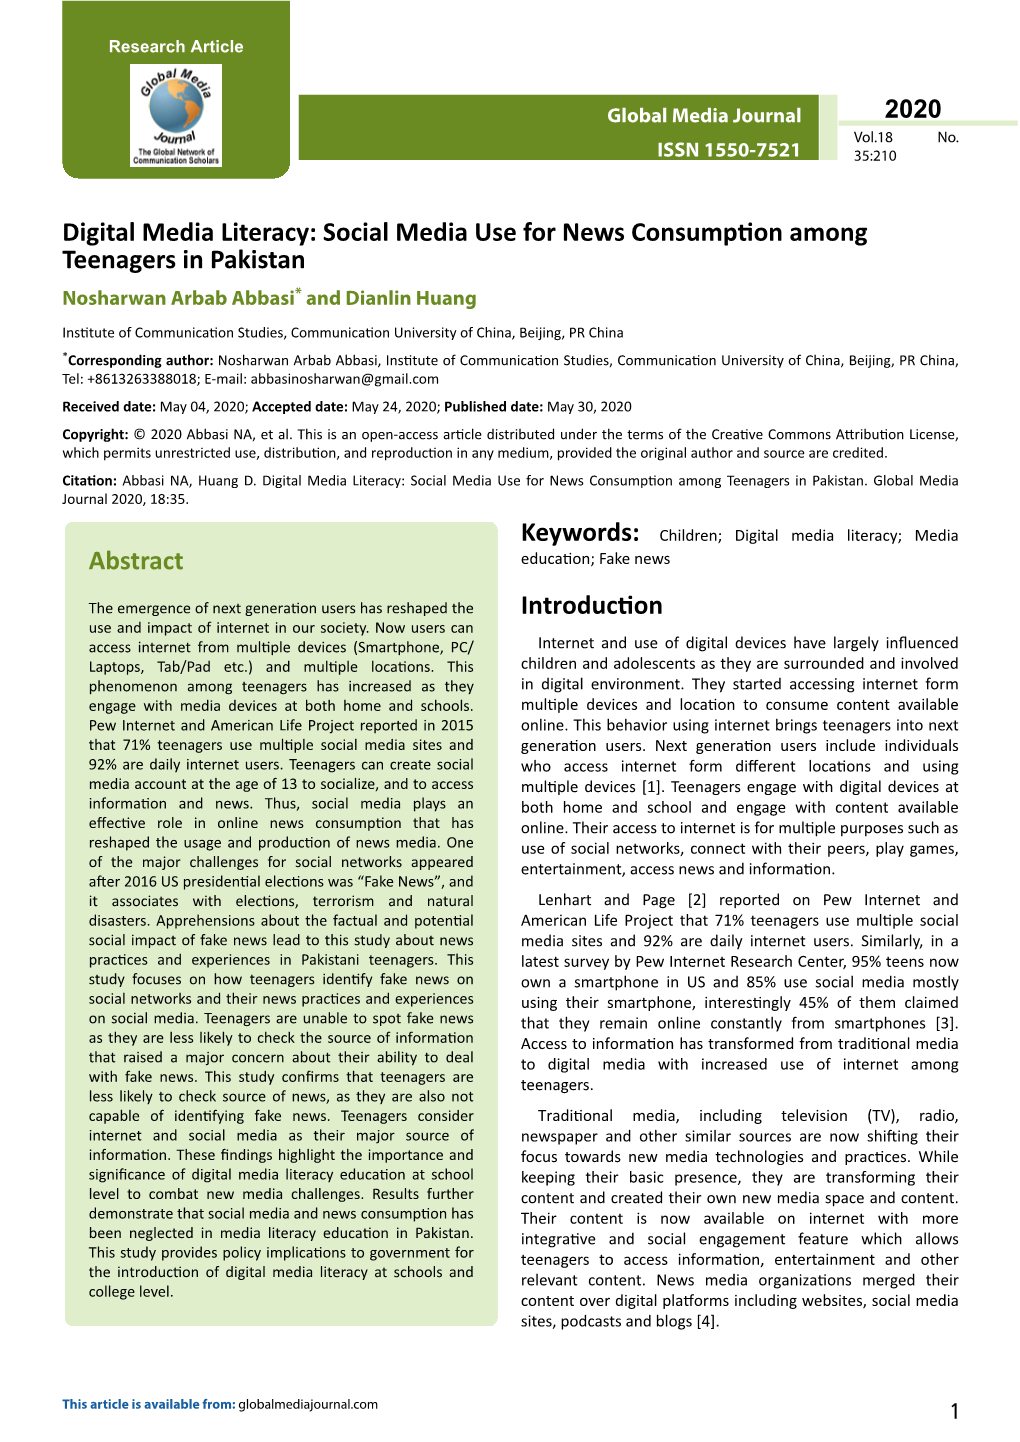 Digital Media Literacy: Social Media Use for News Consumption Among Teenagers in Pakistan Nosharwan Arbab Abbasi* and Dianlin Huang